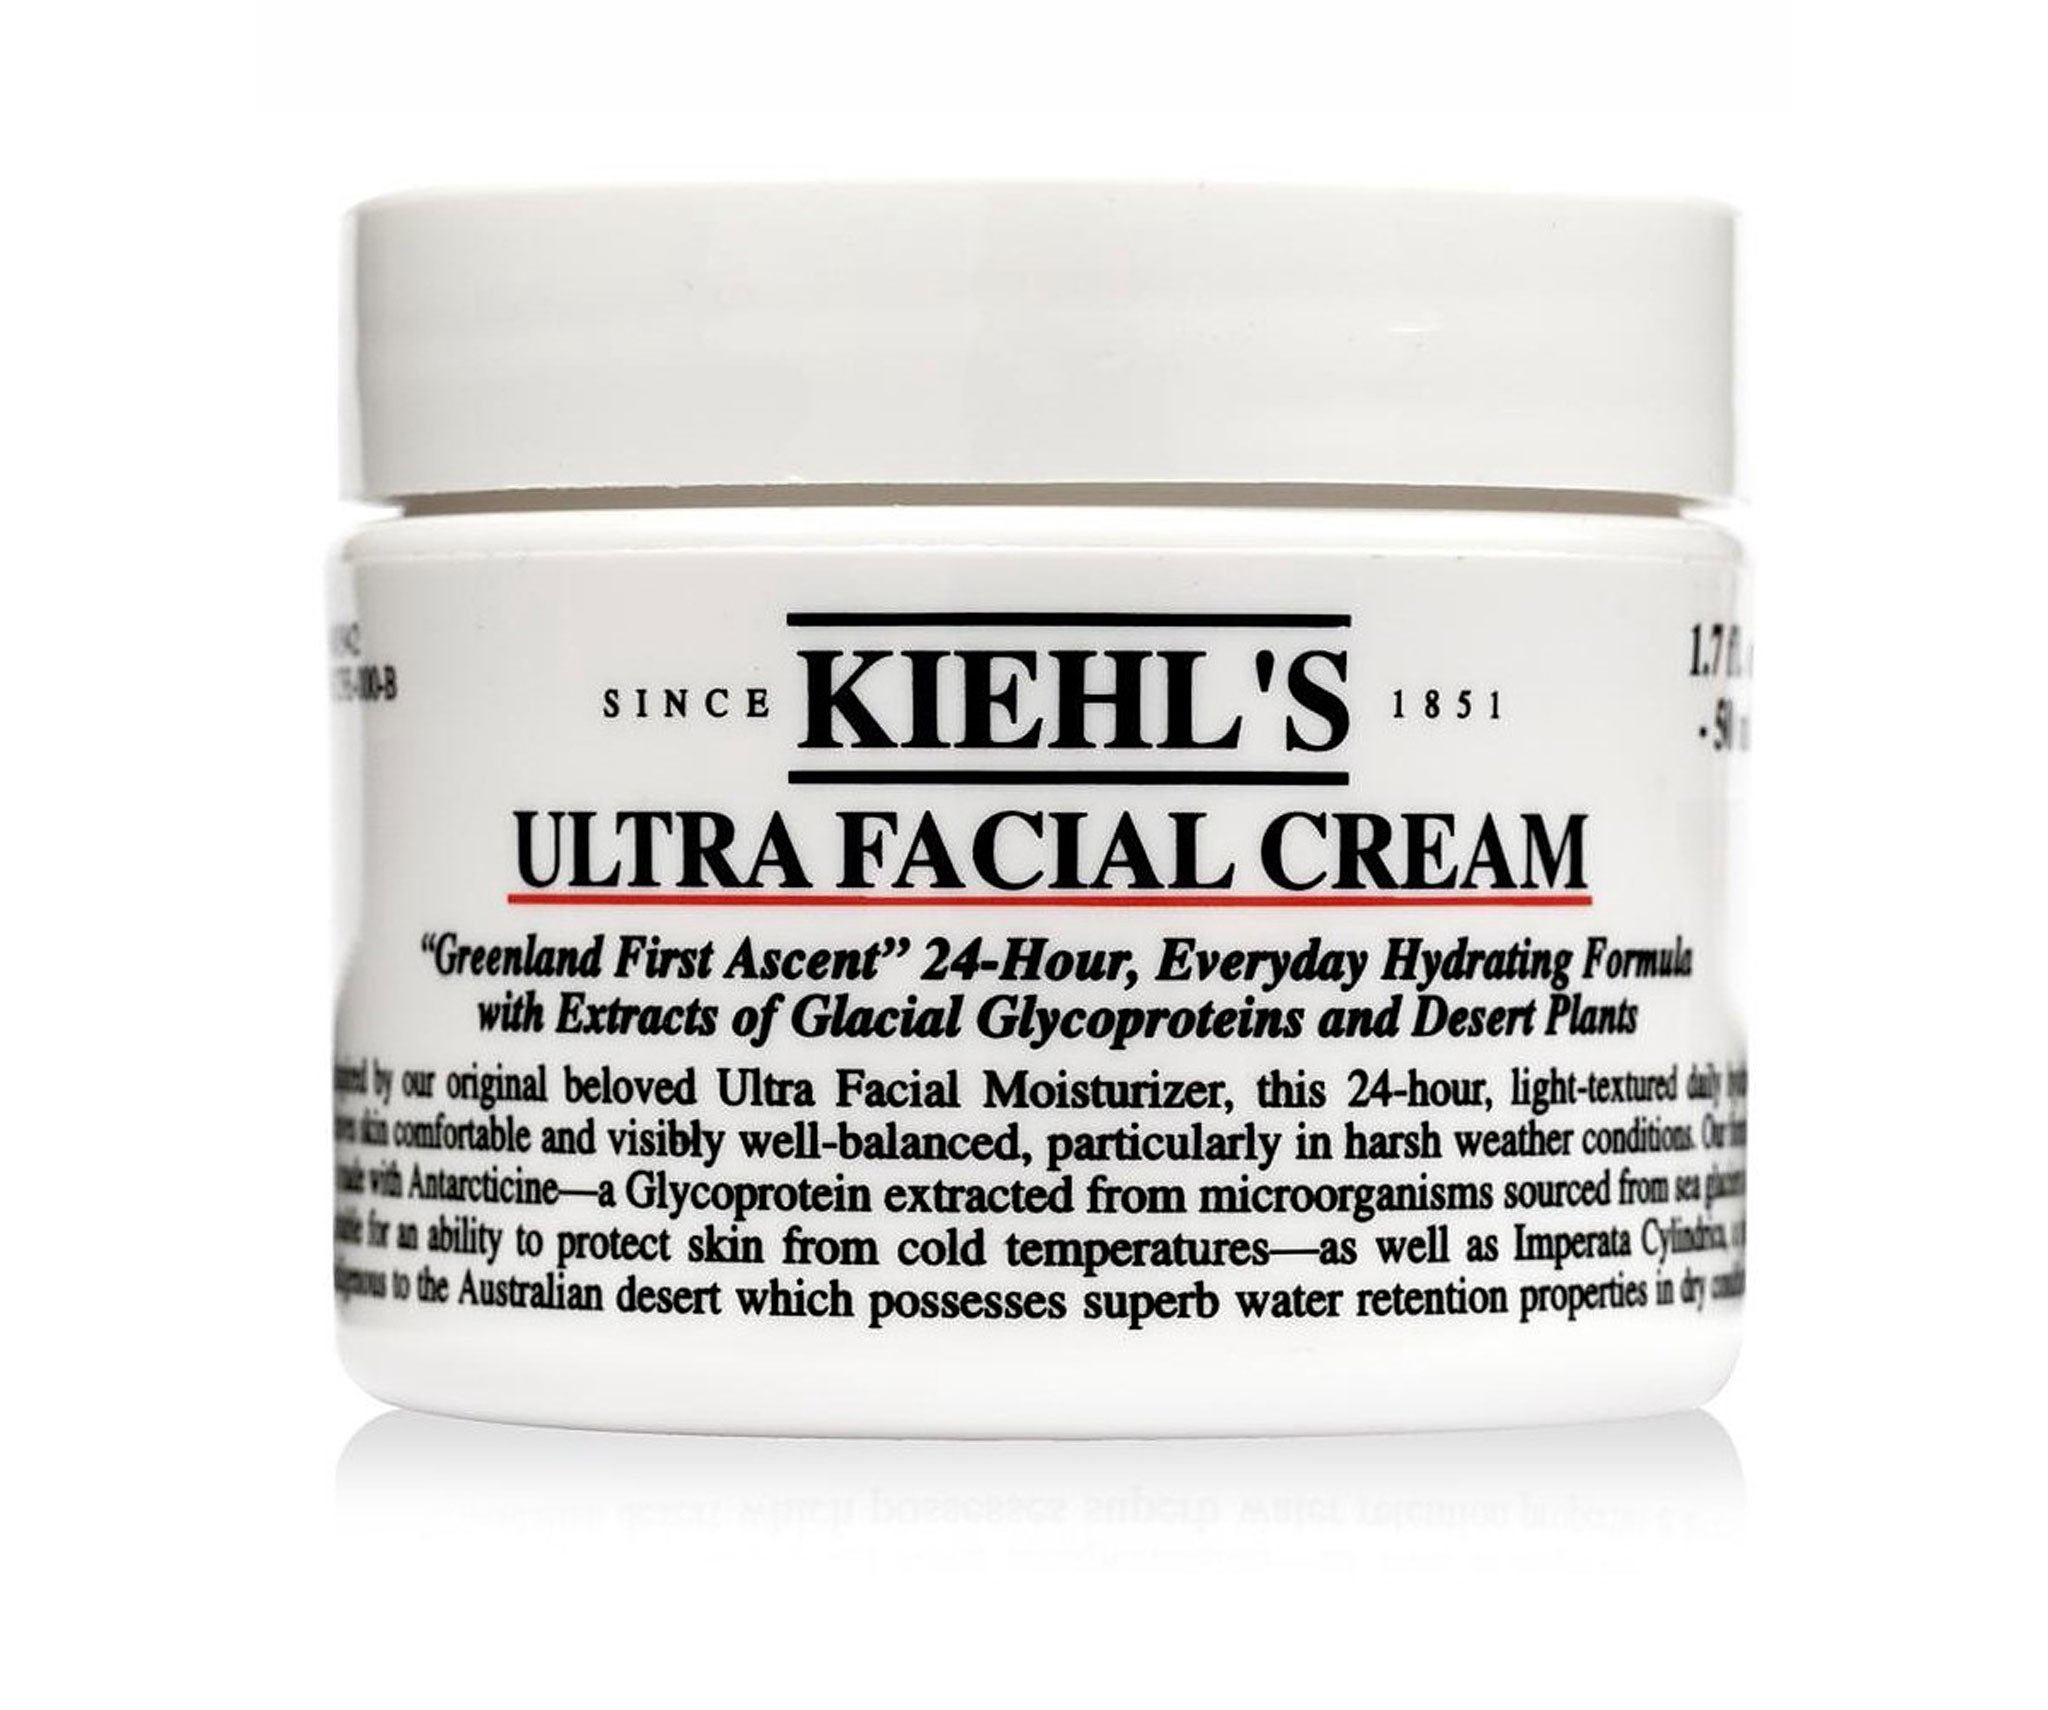 Kiehl's Ultra Facial Cream, £24, kiehls.co.uk